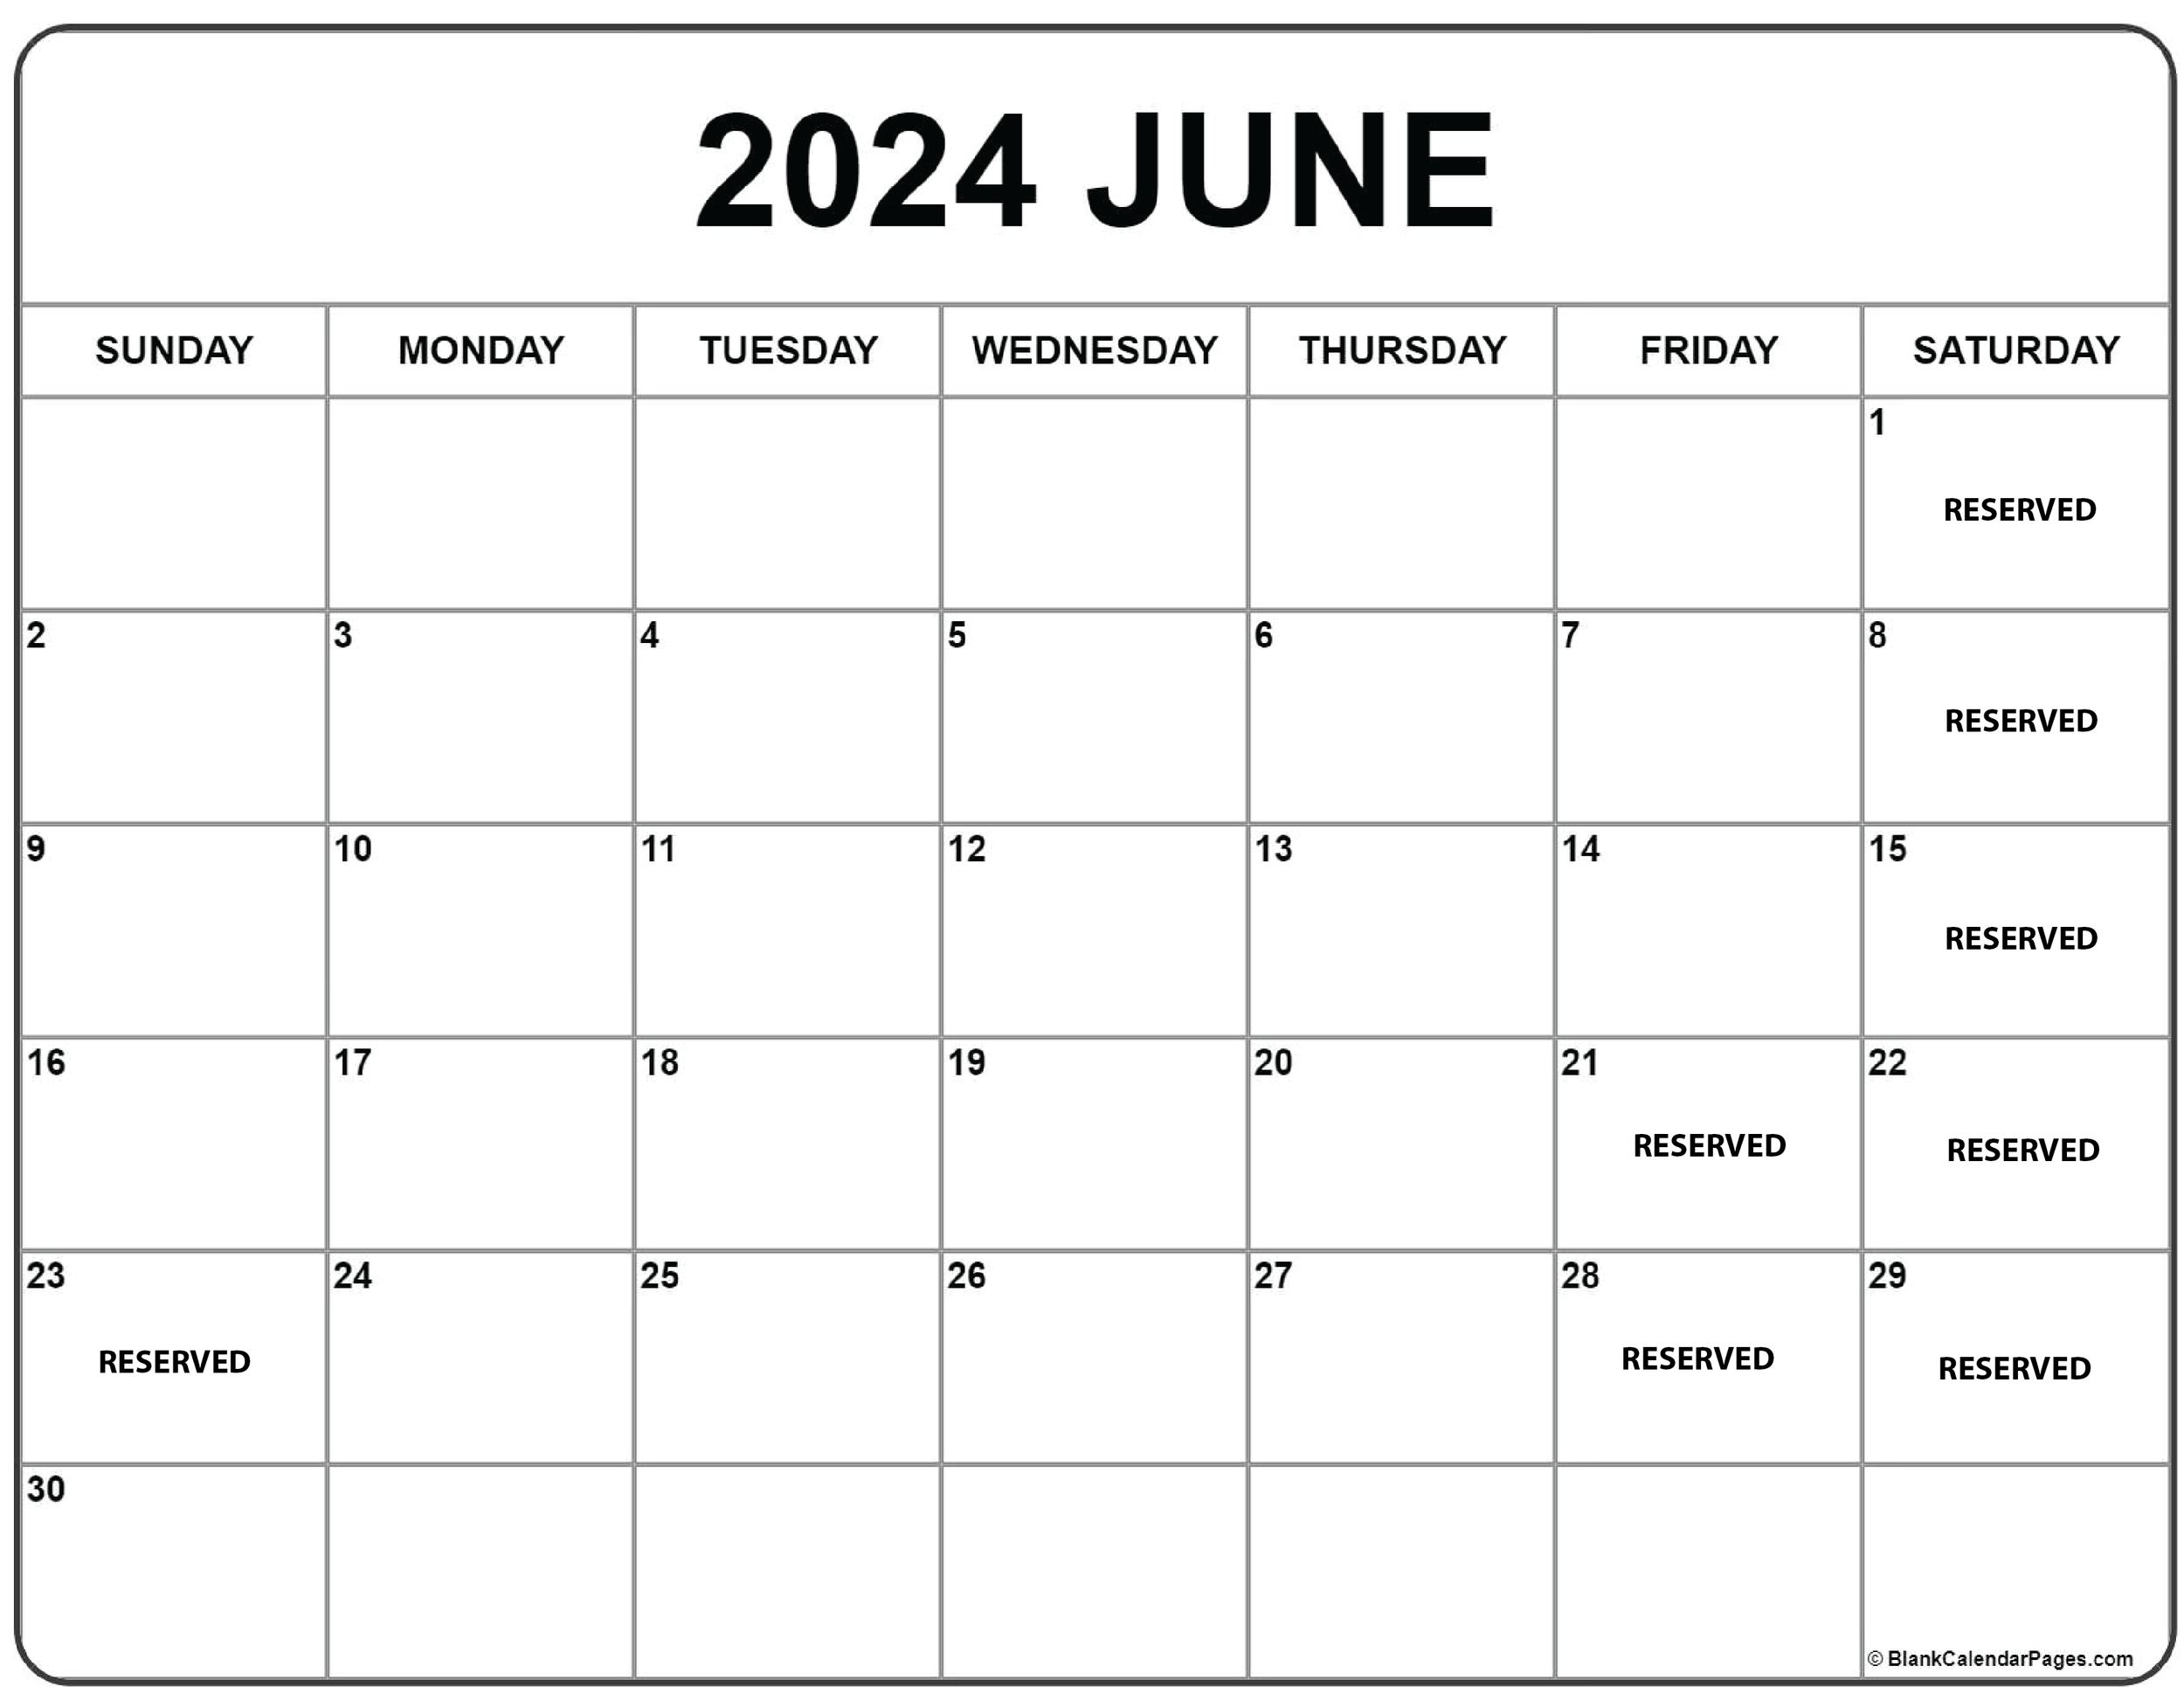 SUC Event Calendar_2024-02.png